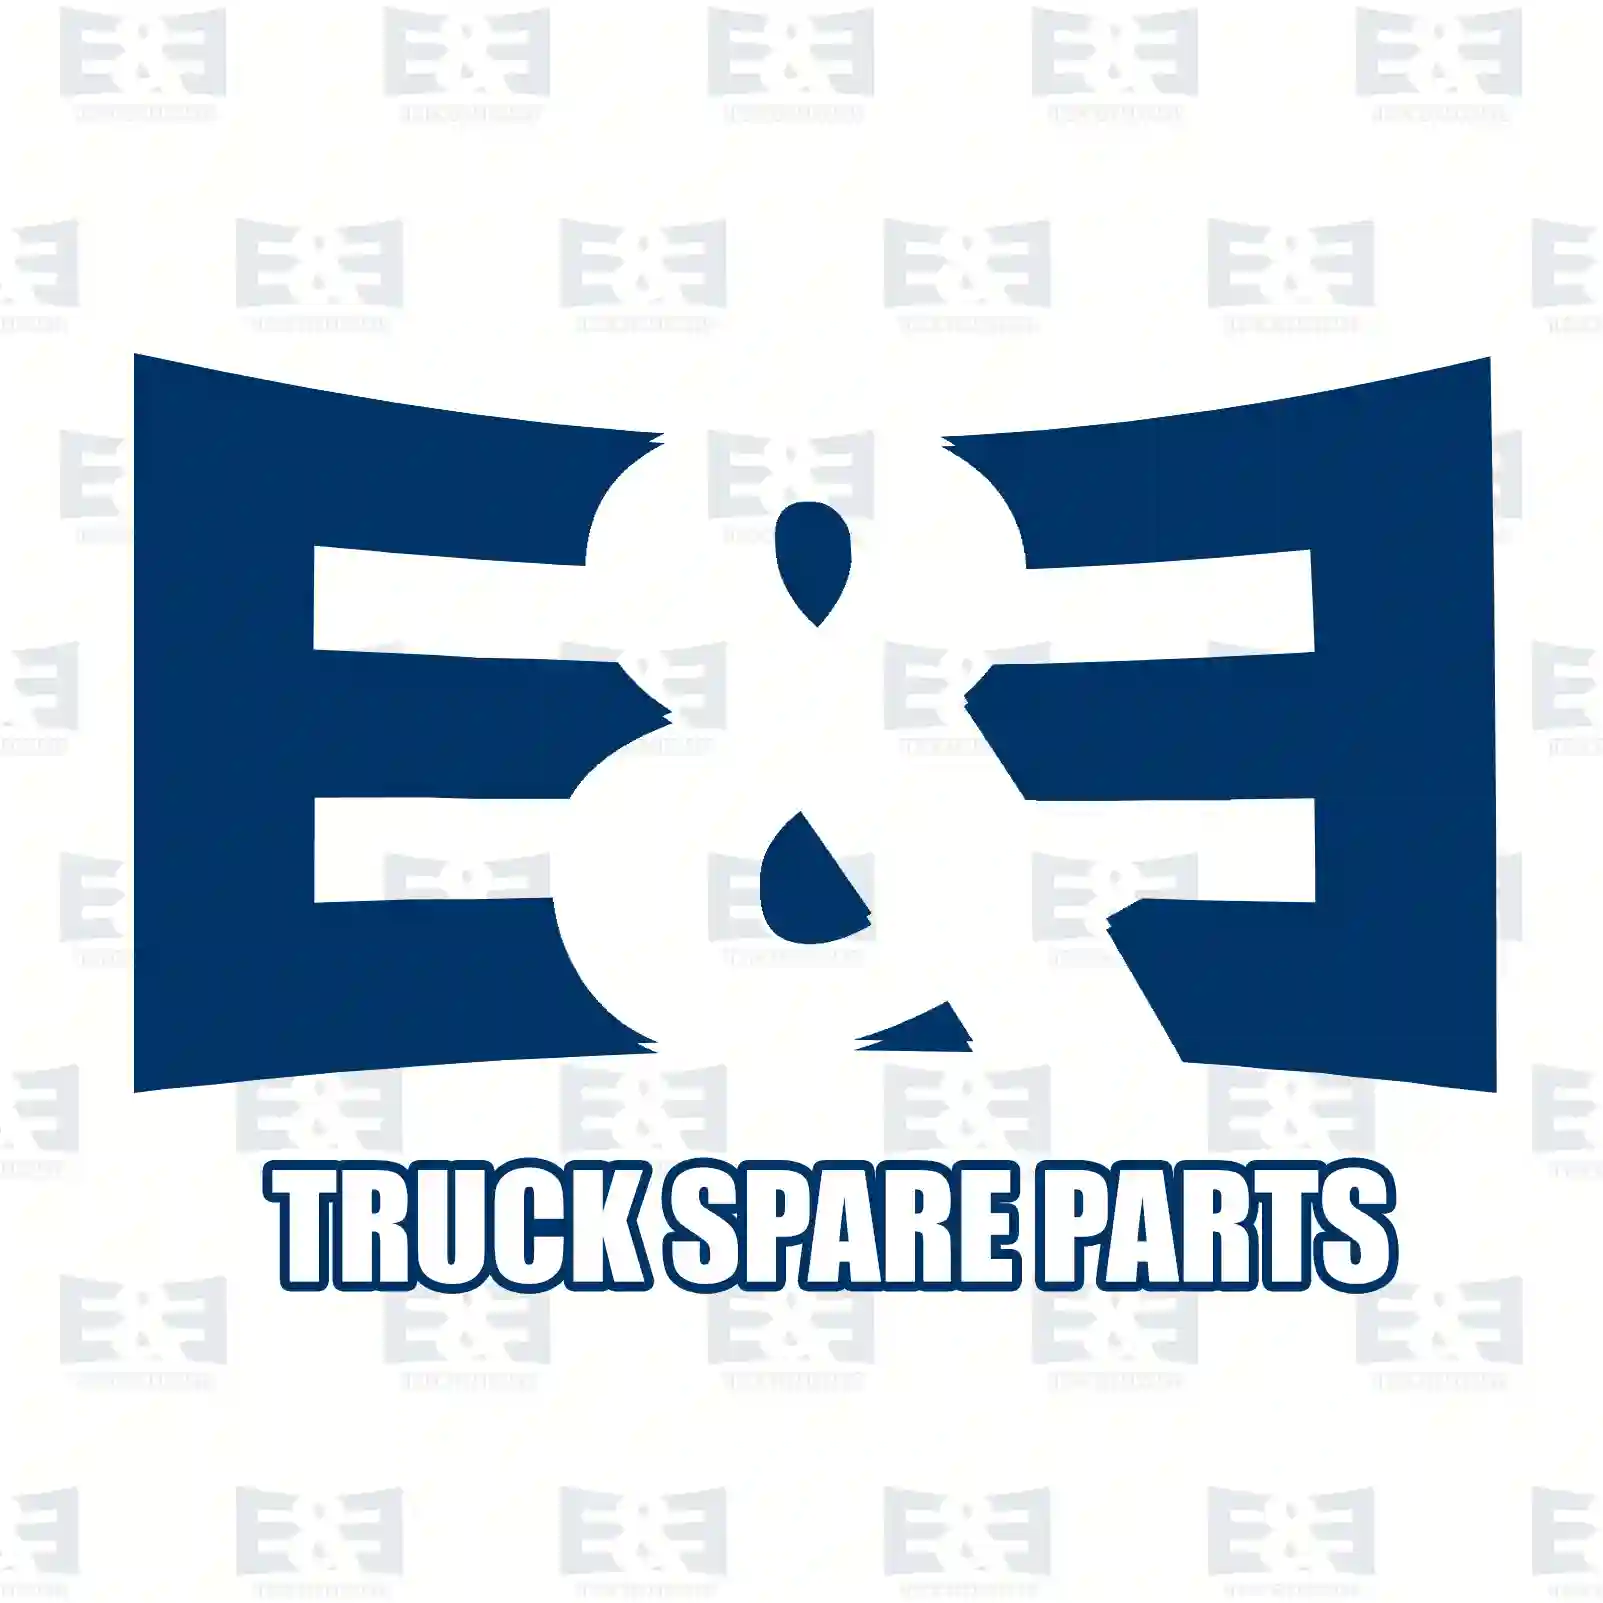 Belt tensioner, complete, with multiribbed belt, 2E2203467, 51958007435S1, , ||  2E2203467 E&E Truck Spare Parts | Truck Spare Parts, Auotomotive Spare Parts Belt tensioner, complete, with multiribbed belt, 2E2203467, 51958007435S1, , ||  2E2203467 E&E Truck Spare Parts | Truck Spare Parts, Auotomotive Spare Parts